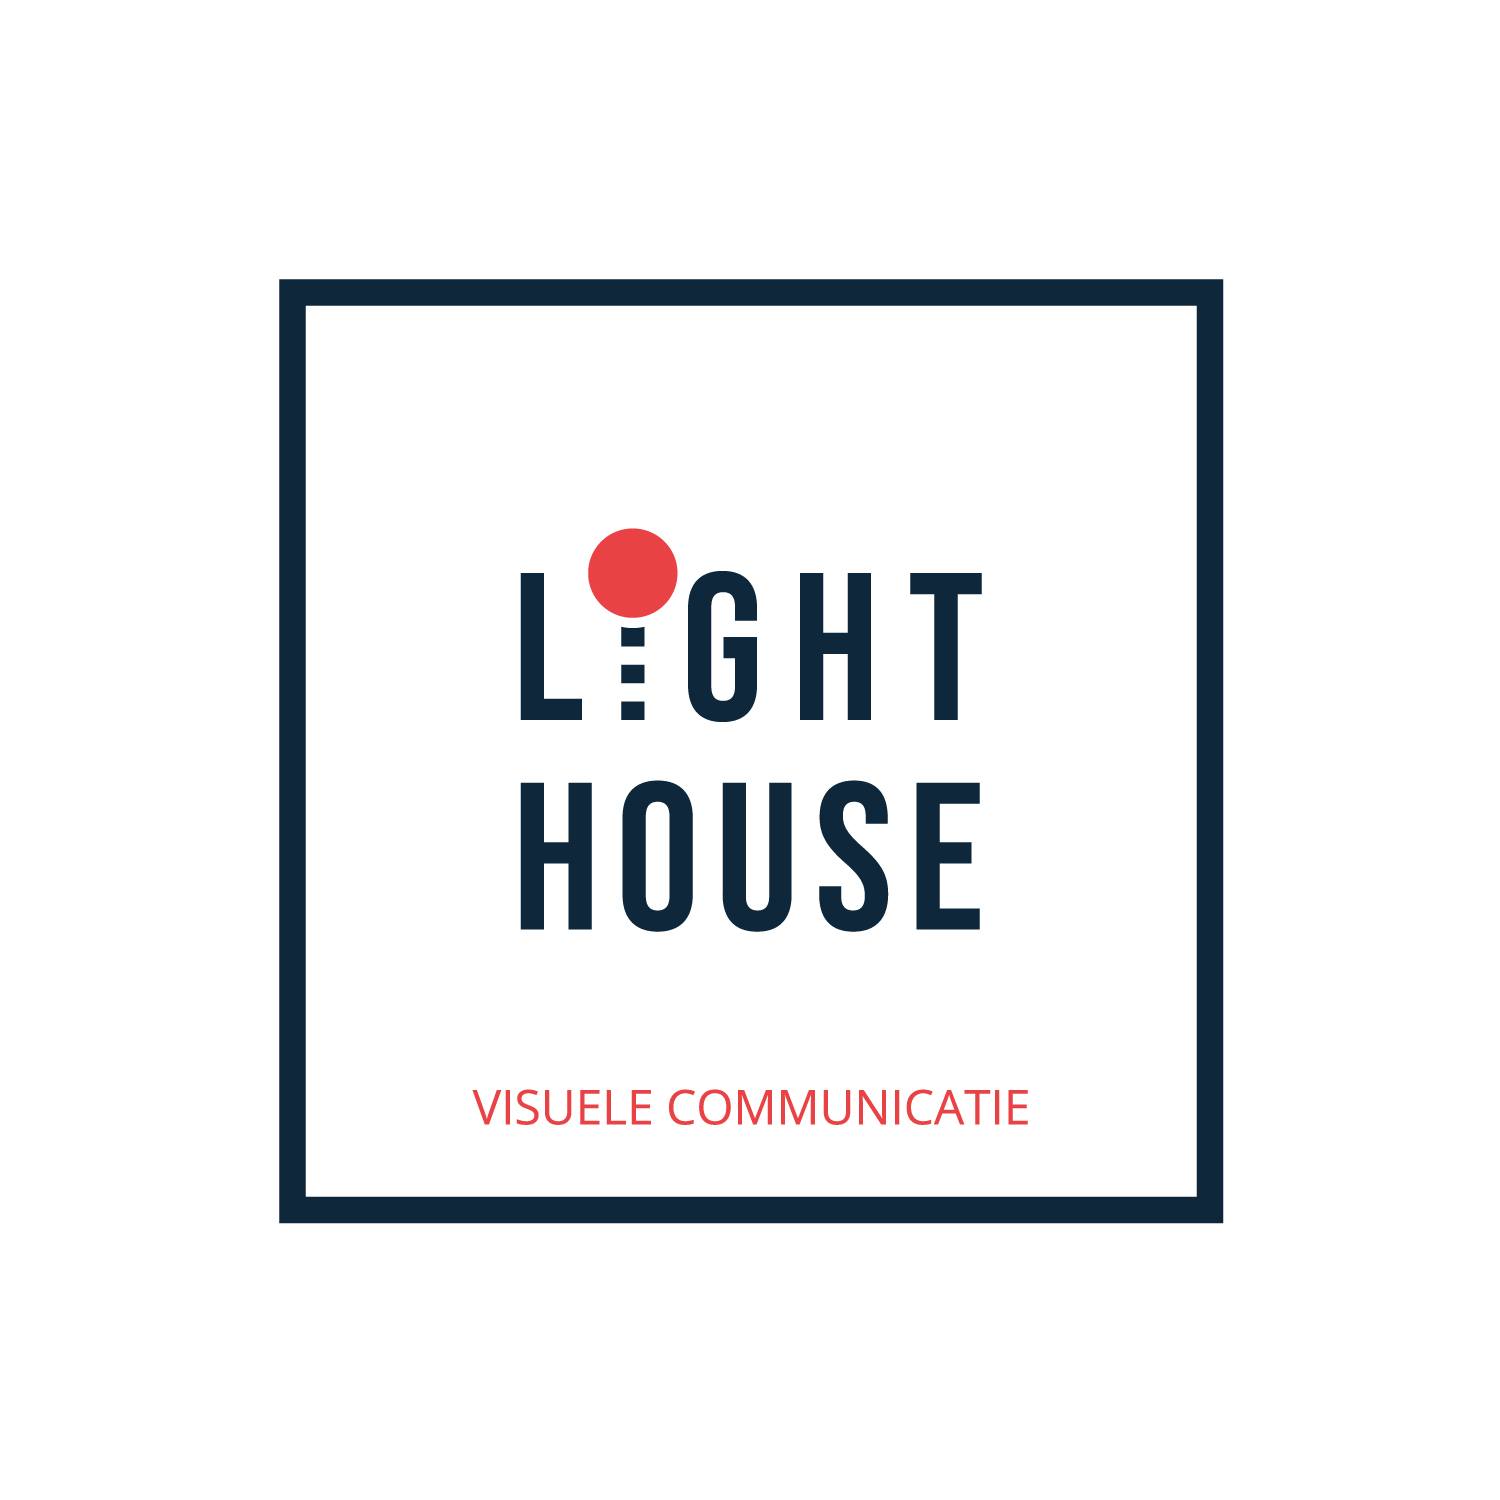 Lighthouse visuele communicatie